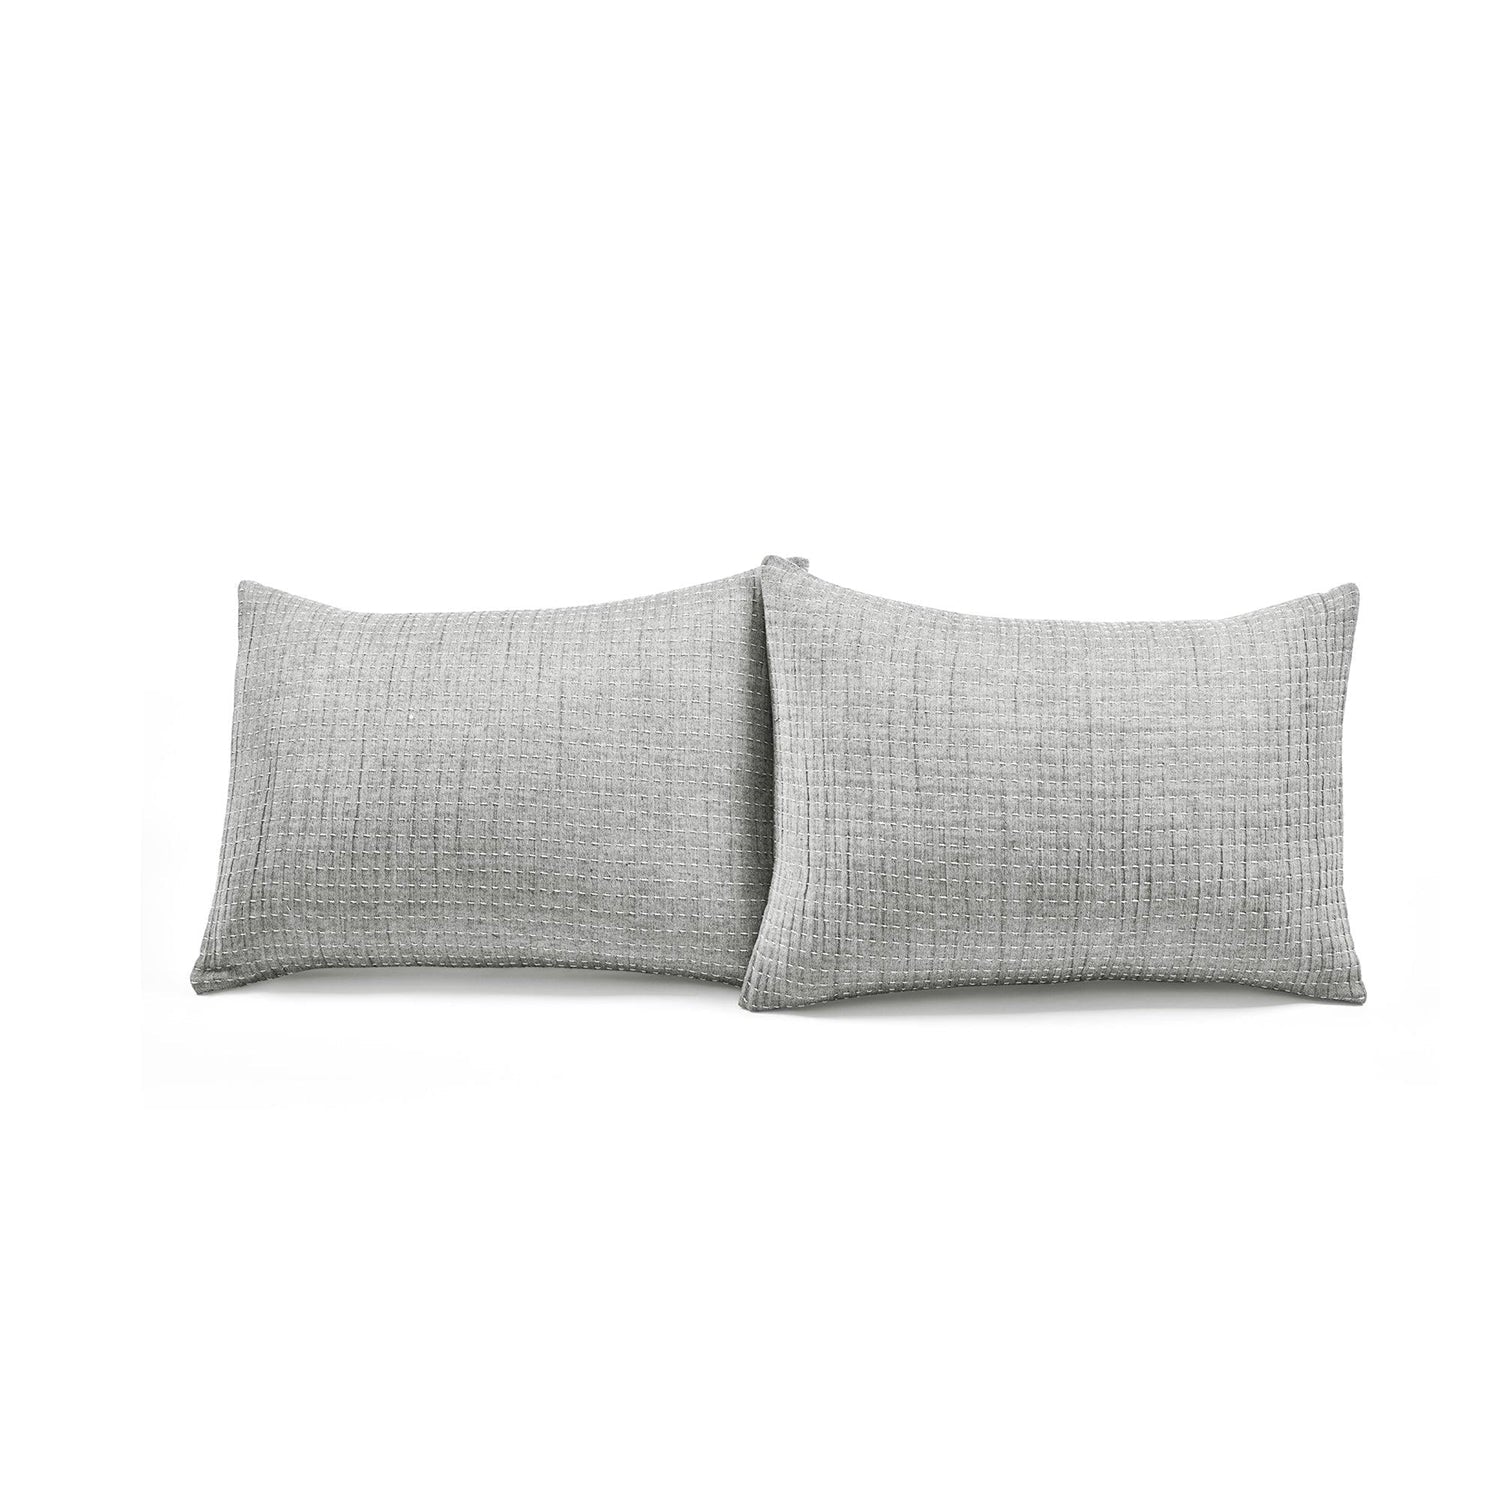 Bedroom > Quilts & Blankets - Full/Queen Size 3-Piece Reversible Cotton Yarn Woven Quilt Set In Grey Cream